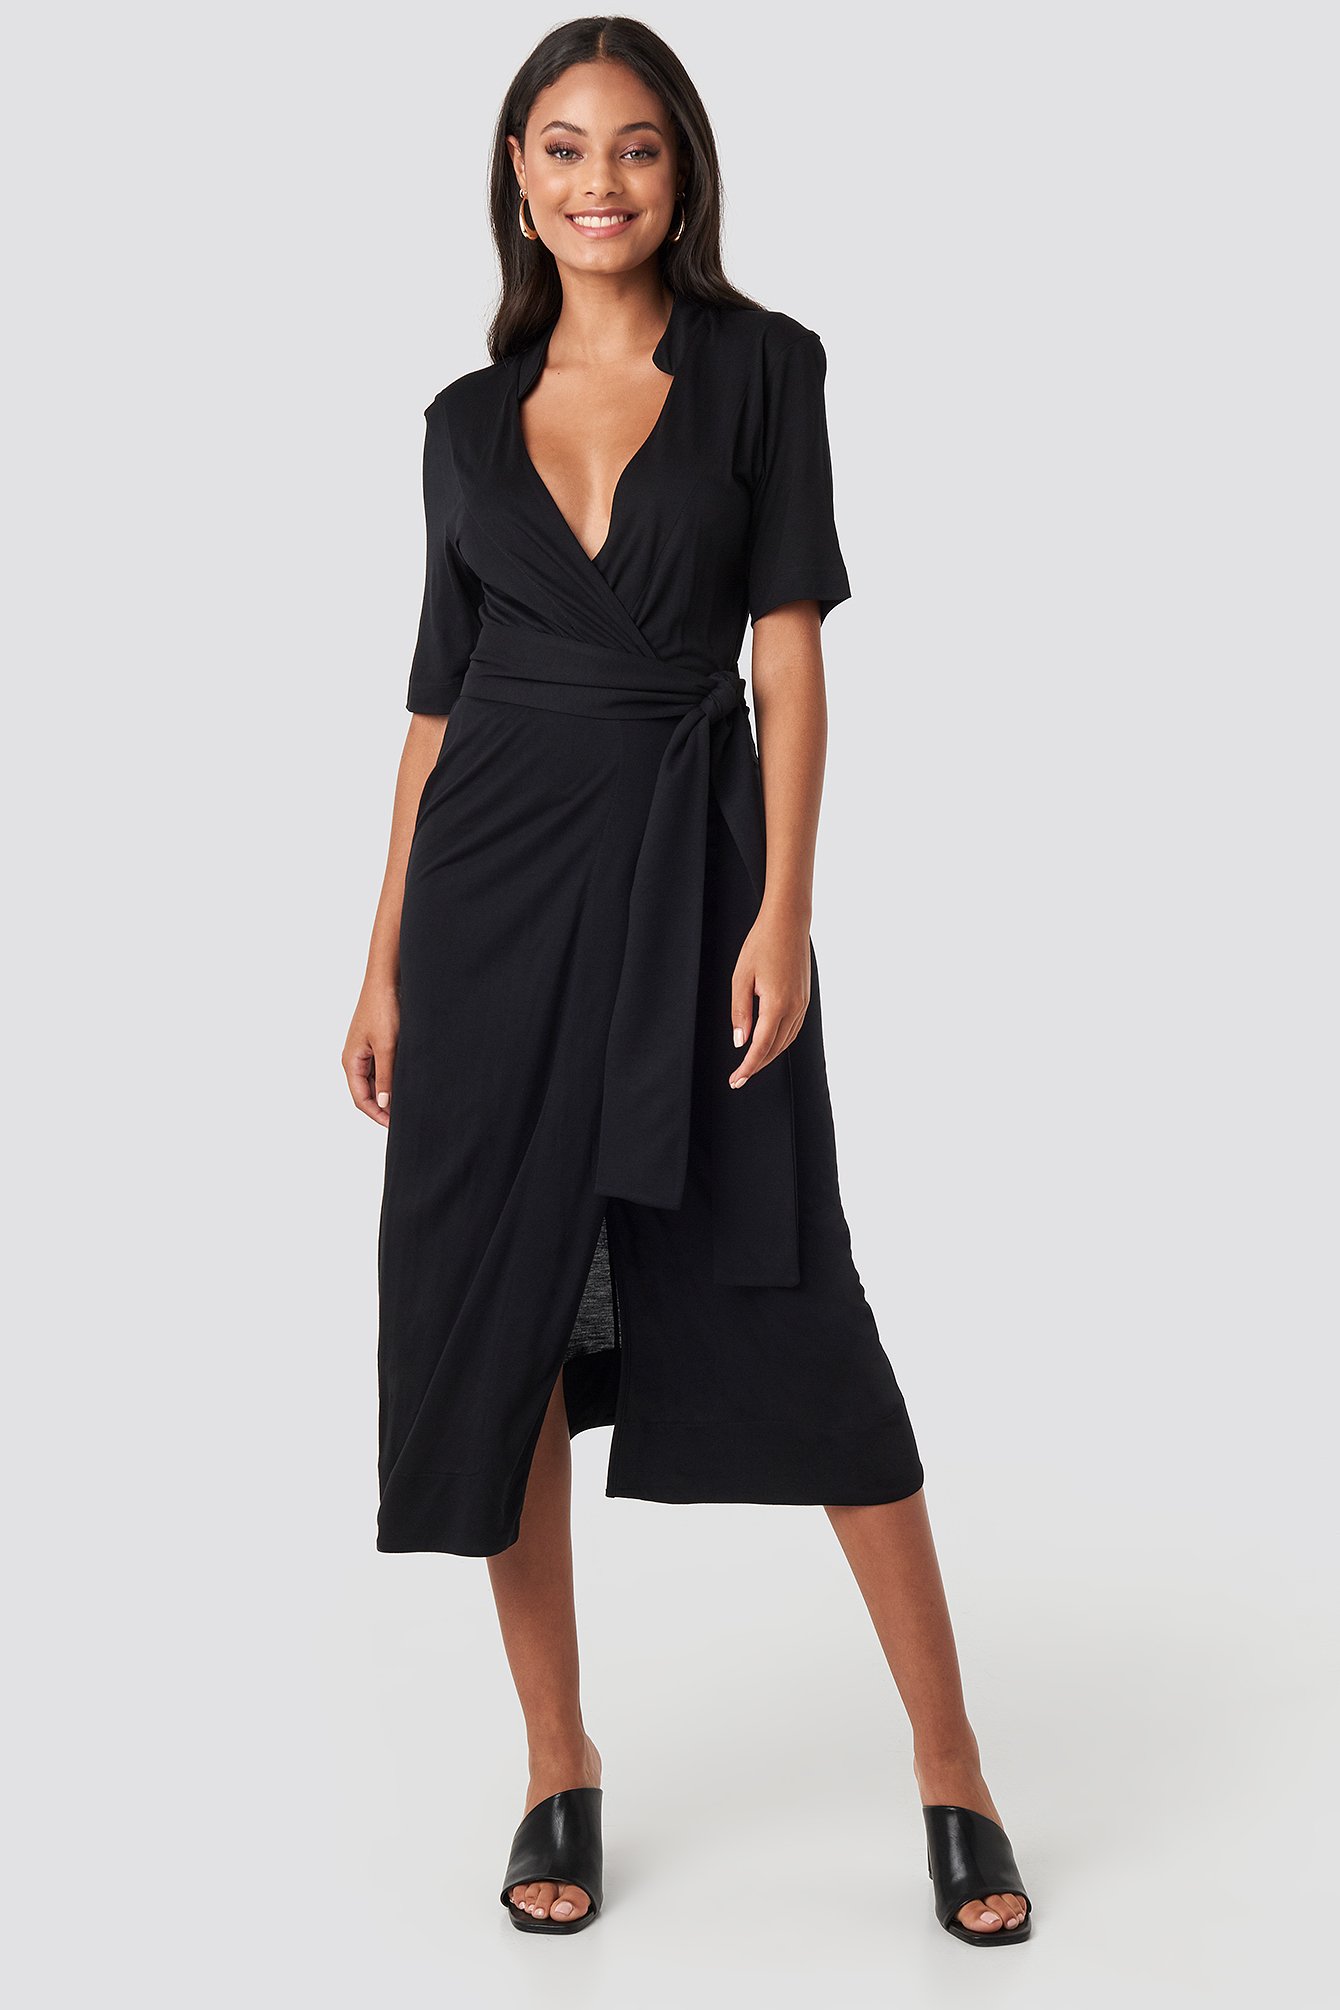 wrap black midi dress Big sale - OFF 70%